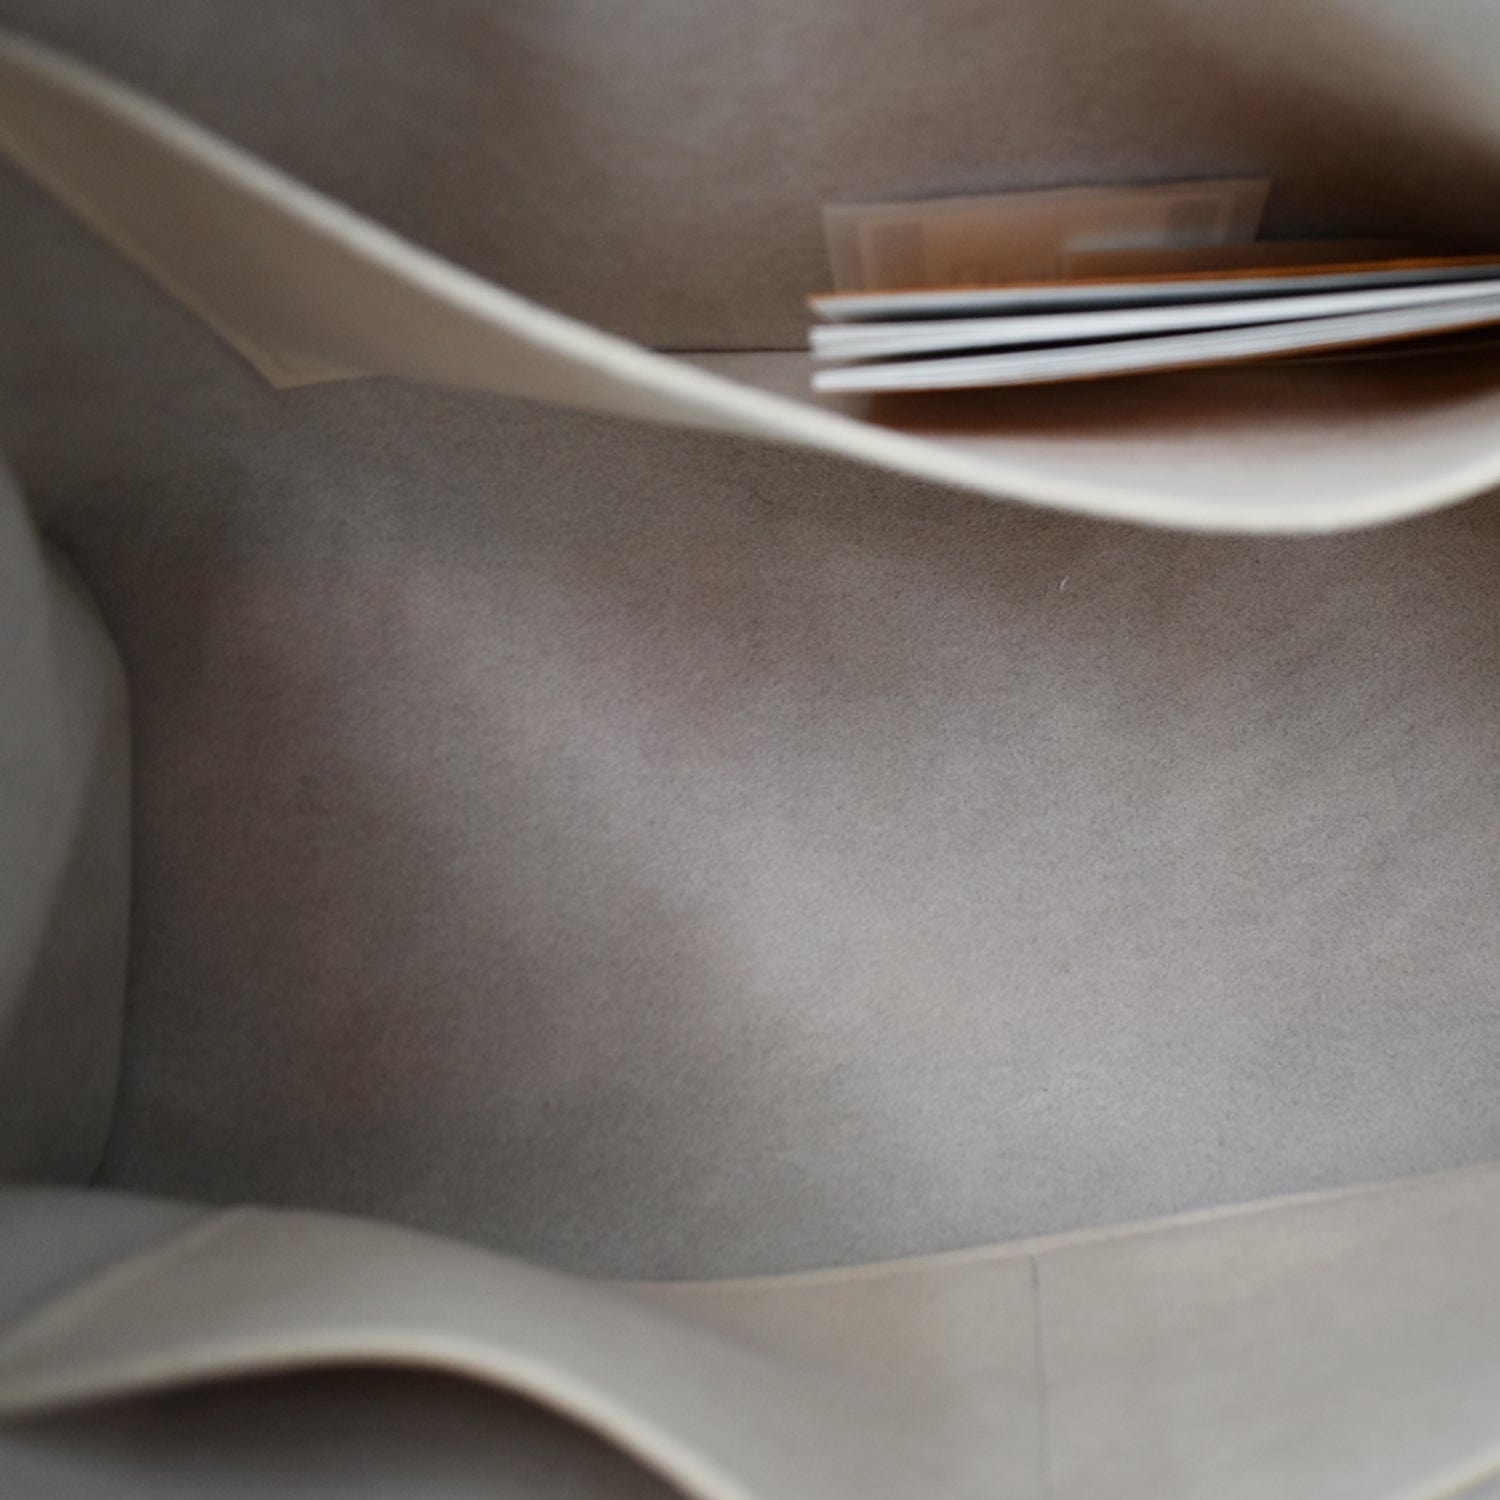 Louis Vuitton Tuileries Monogram Canvas Shoulder Bag Sesame Peach Creme